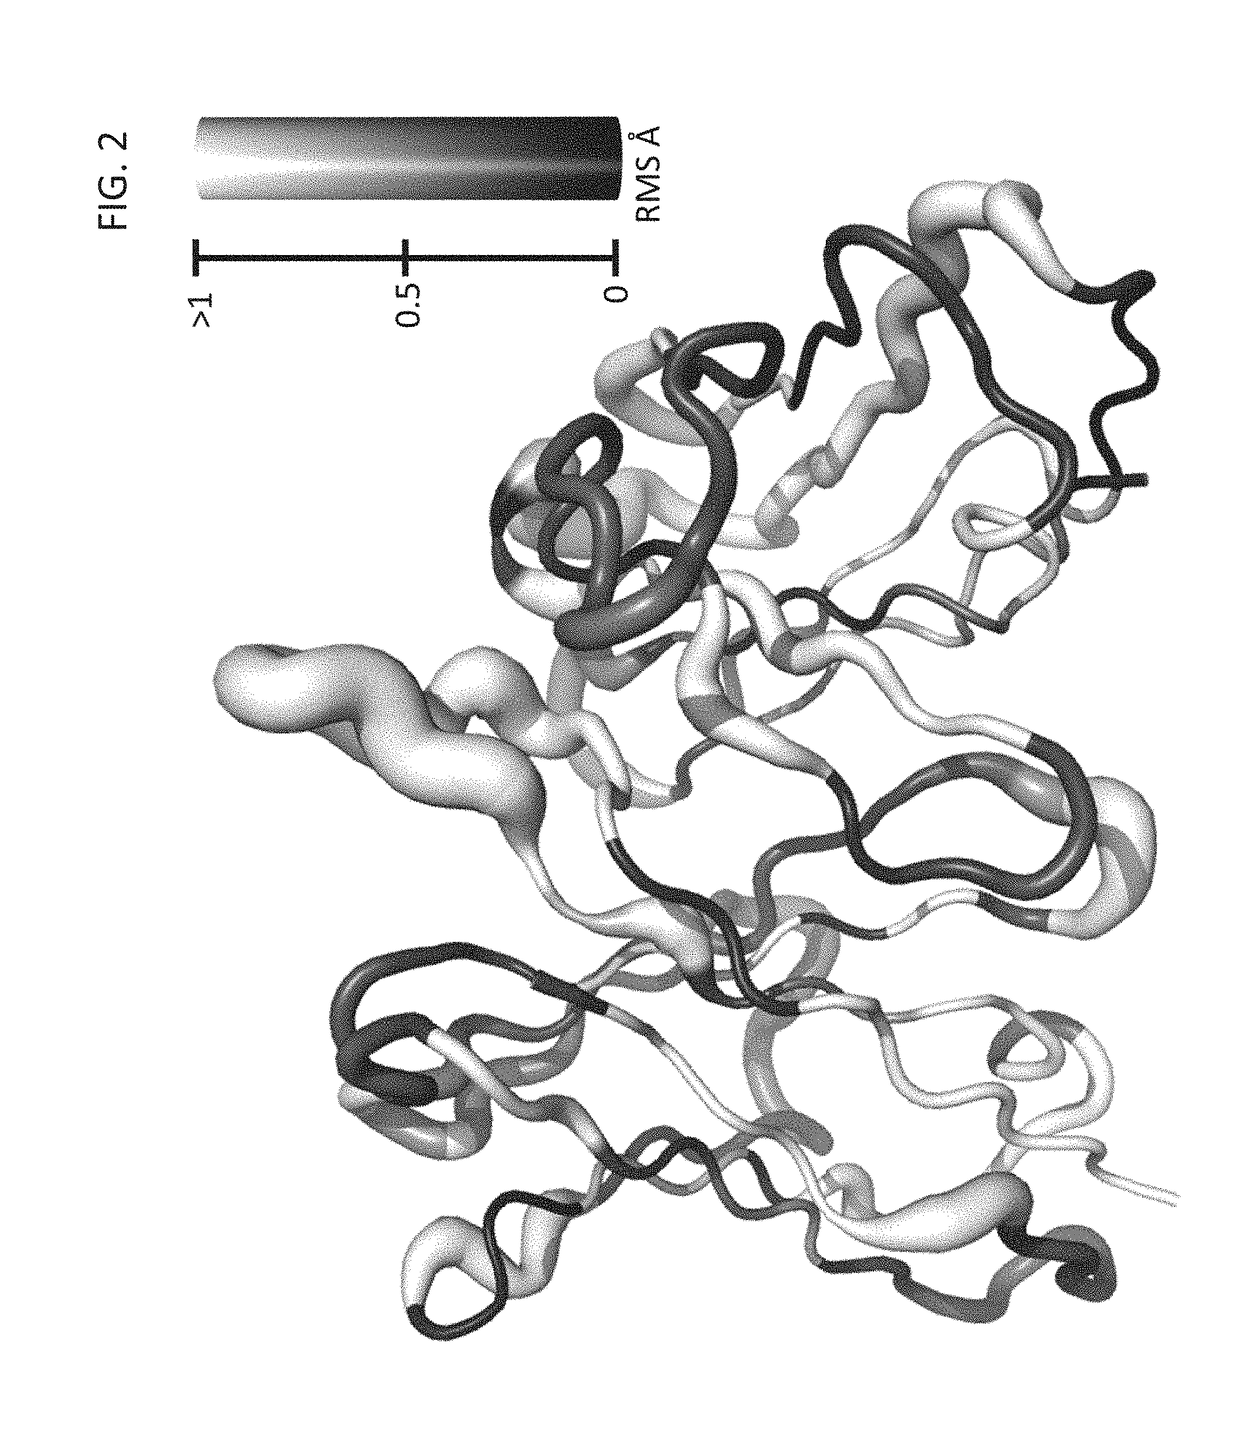 Method of computational protein design